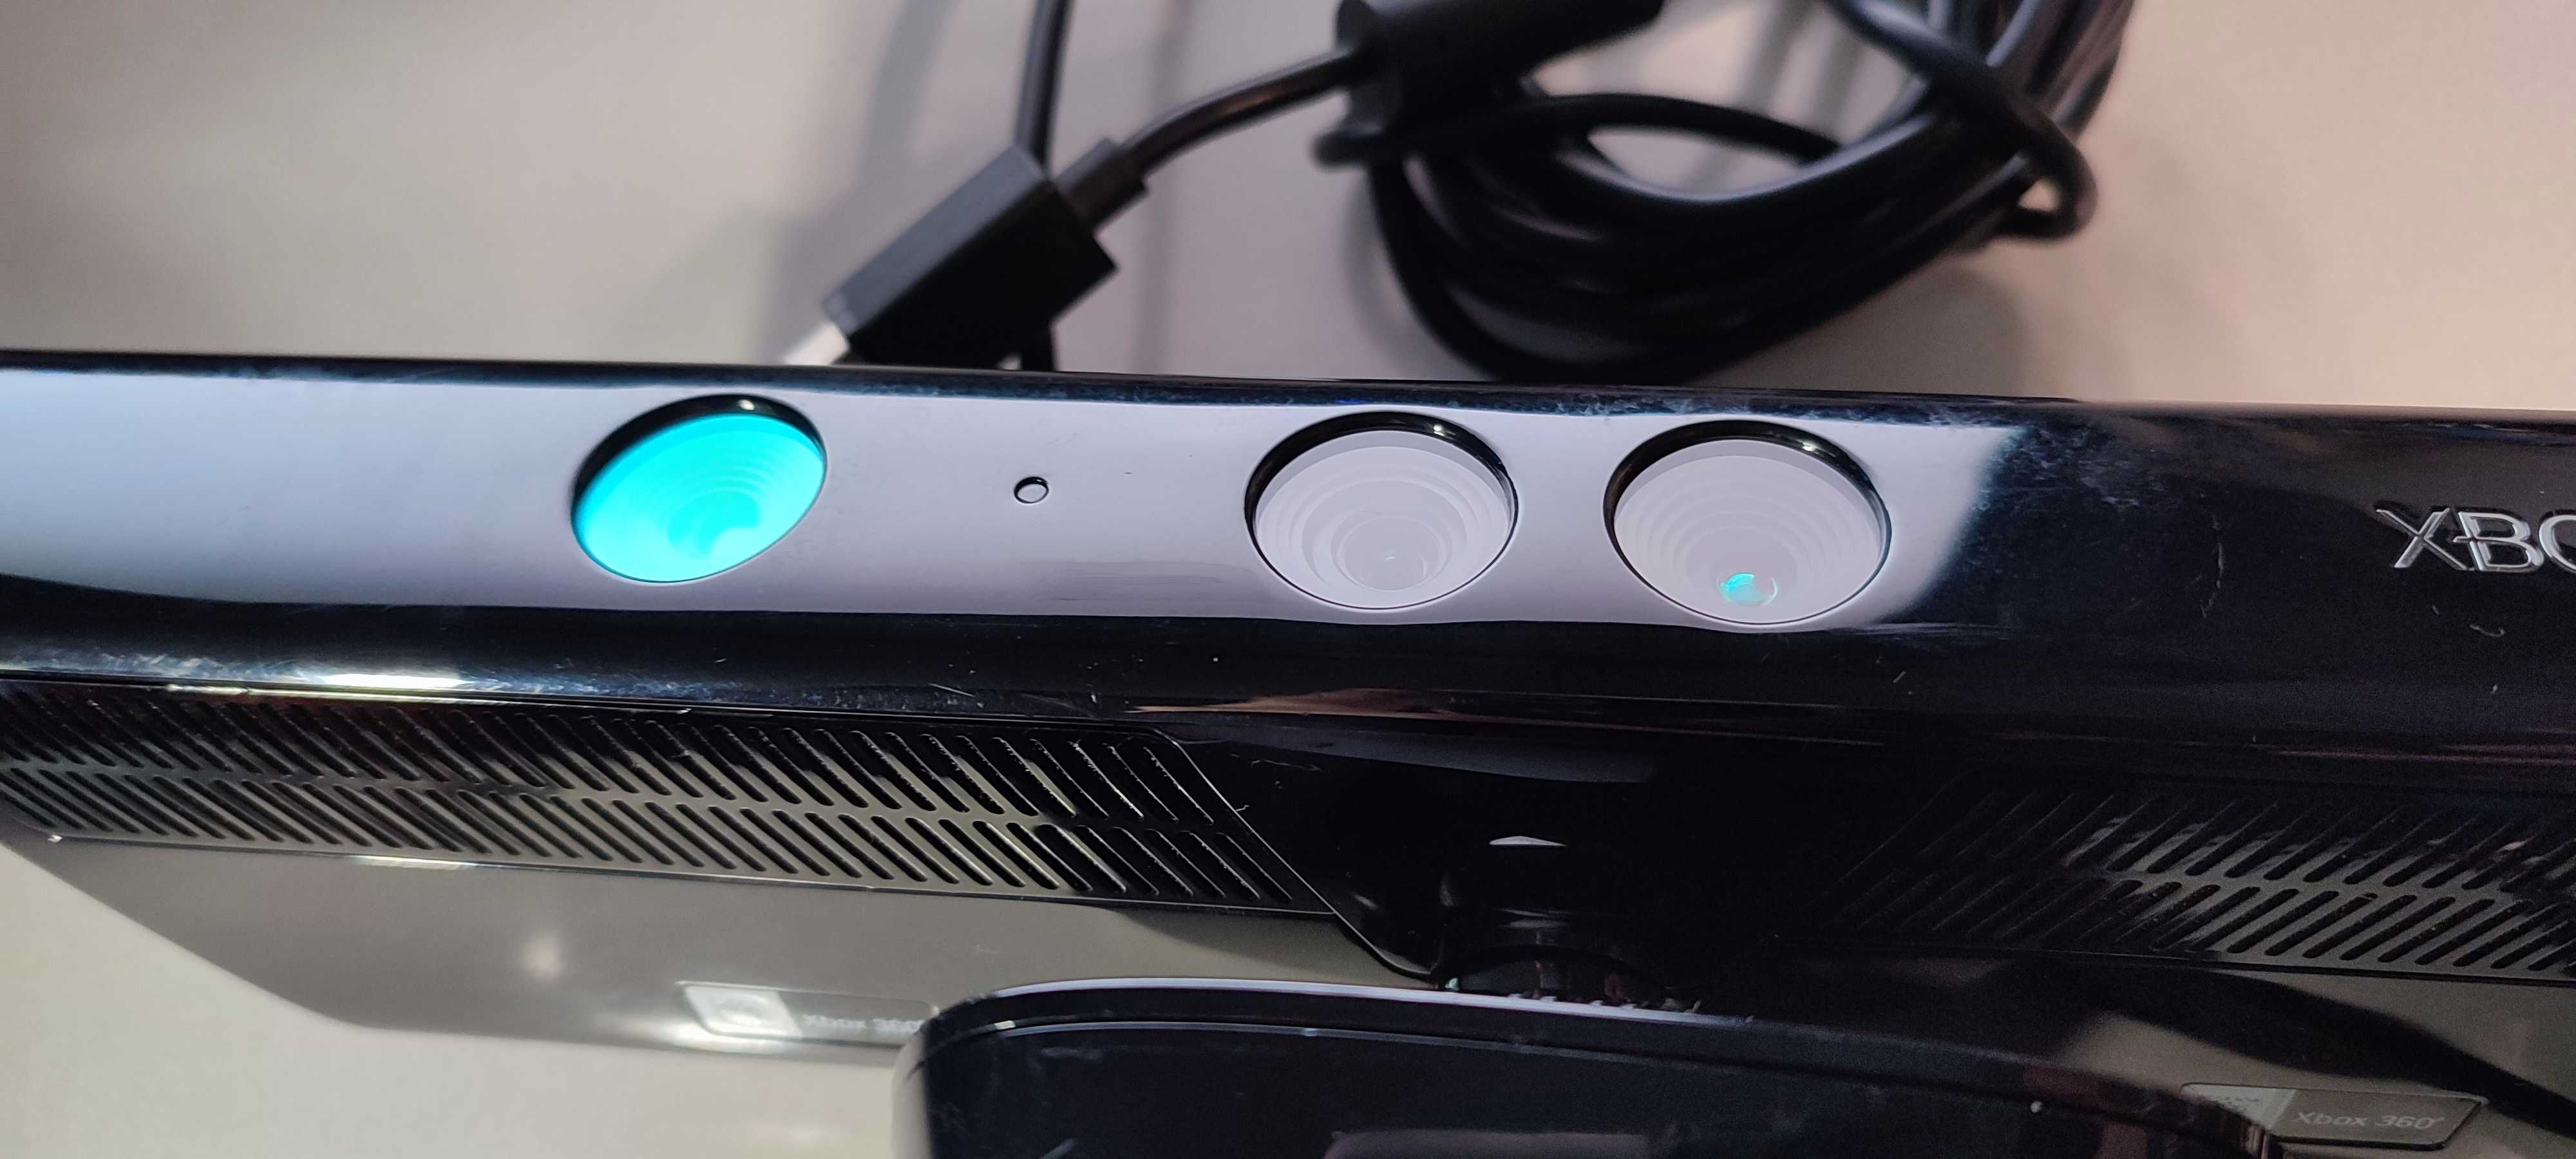 Kinect Xbox 360 z zasilaczem/konwerterem USB - skaner 3D pod Windows